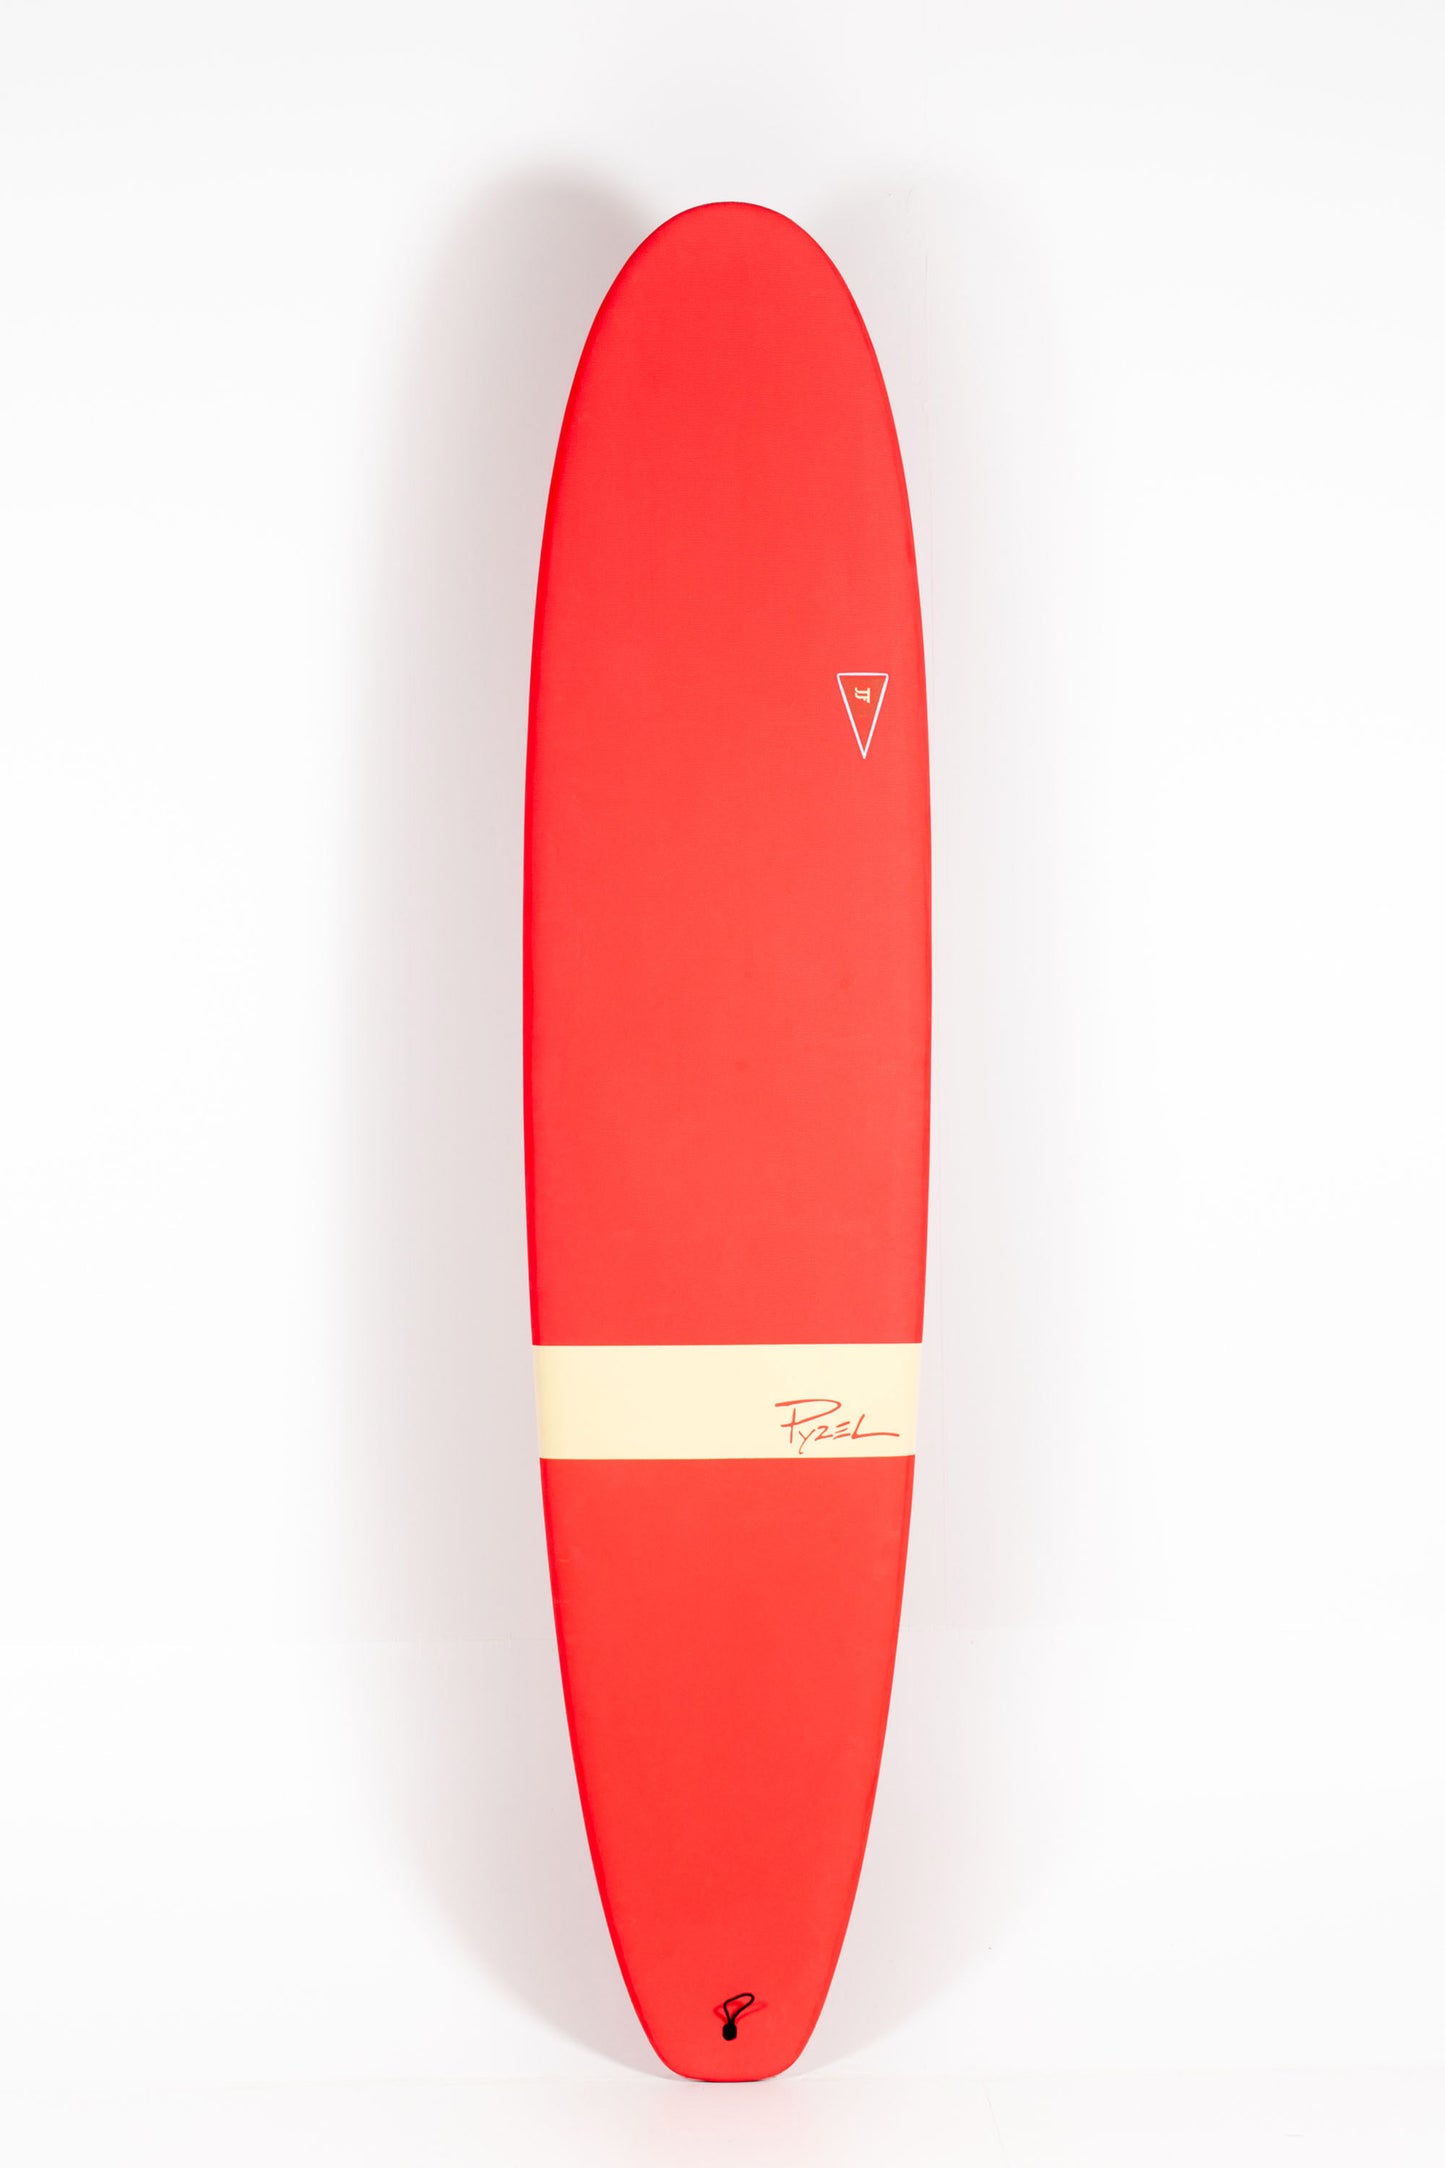 Pukas Surf Shop - JJF SURFBOARD - THE LOG 9.0 RED